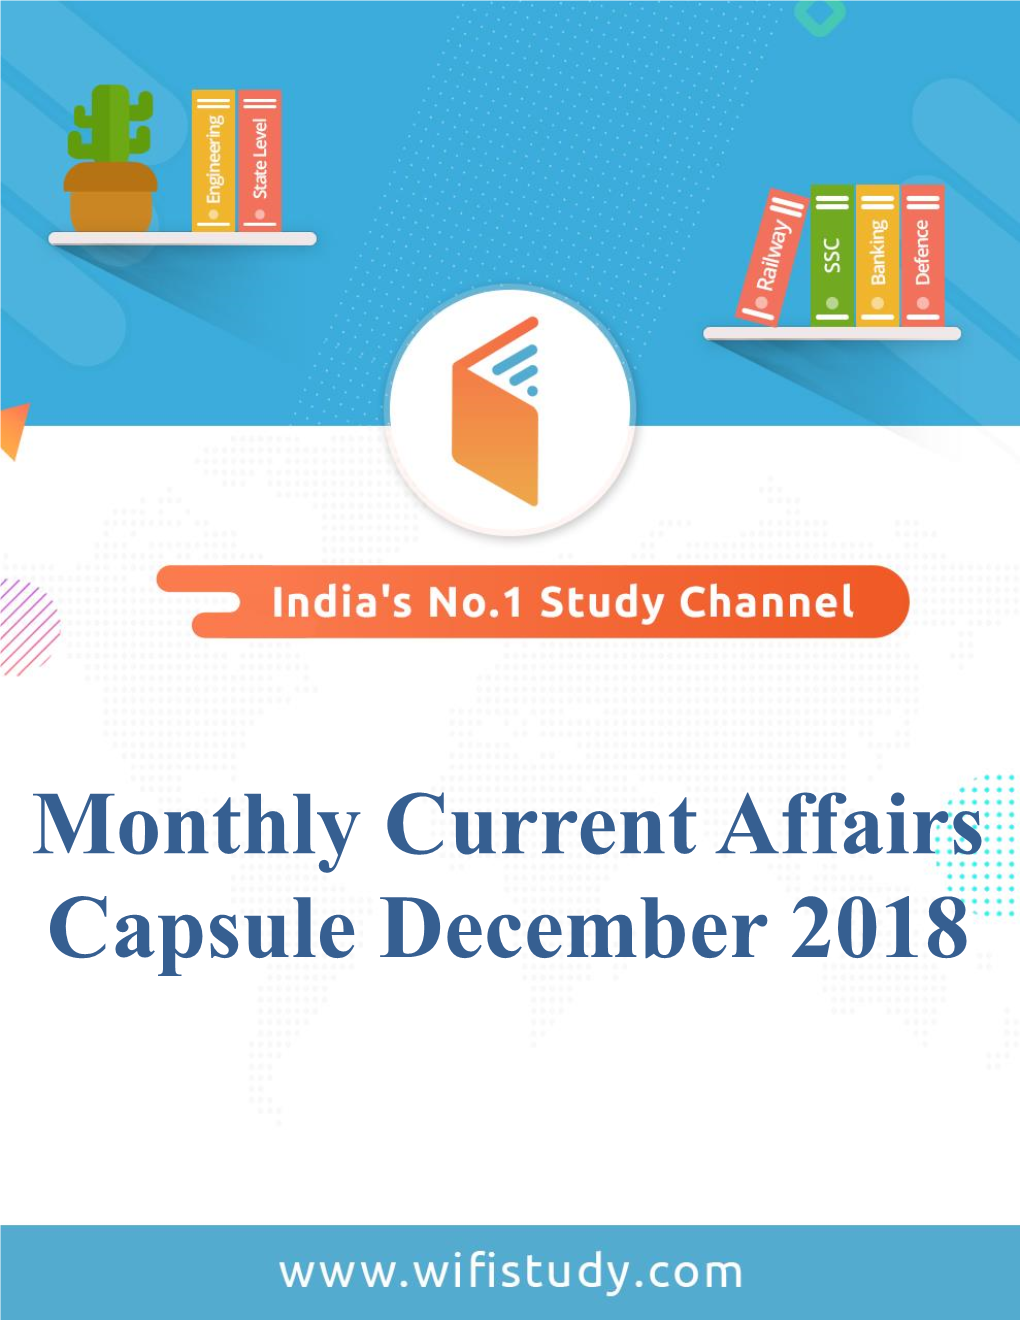 Monthly Current Affairs Capsule December 2018